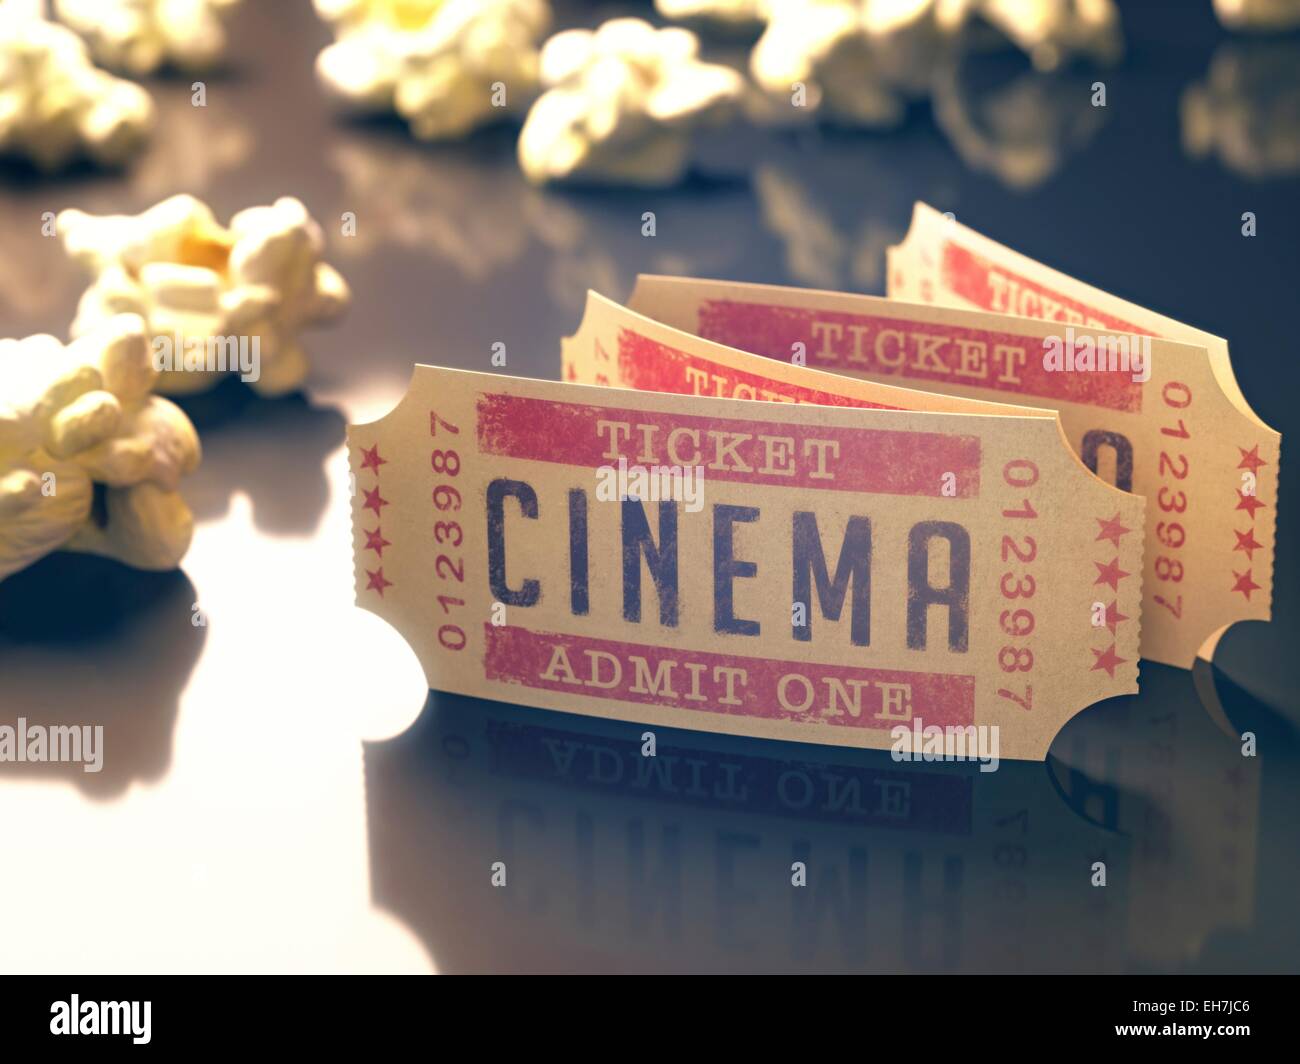 Cinema tickets and popcorn, illustration Stock Photo